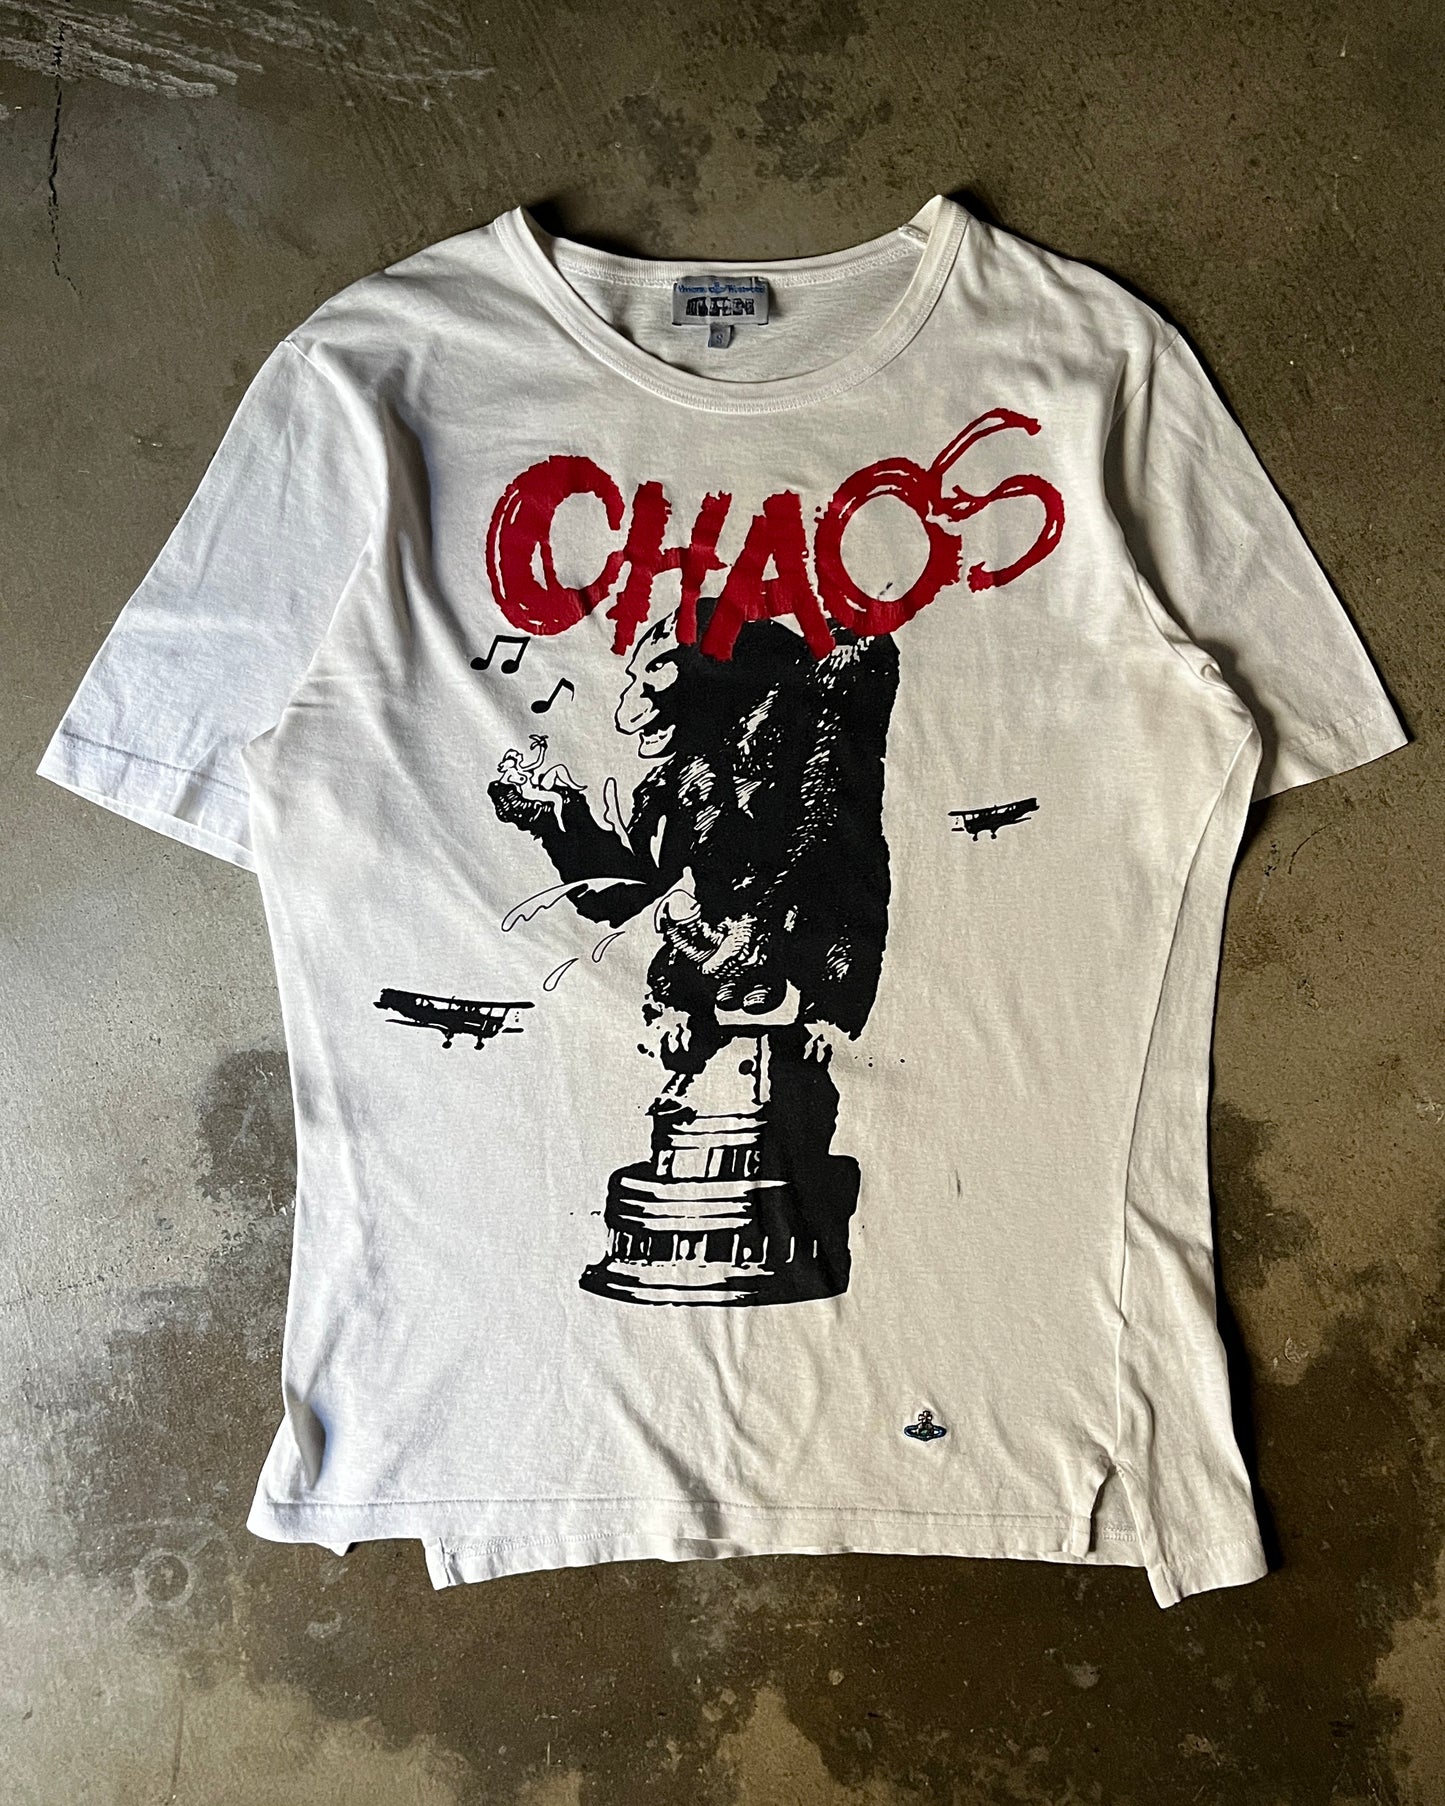 Vivienne Westwood "Chaos" King Kong Tee